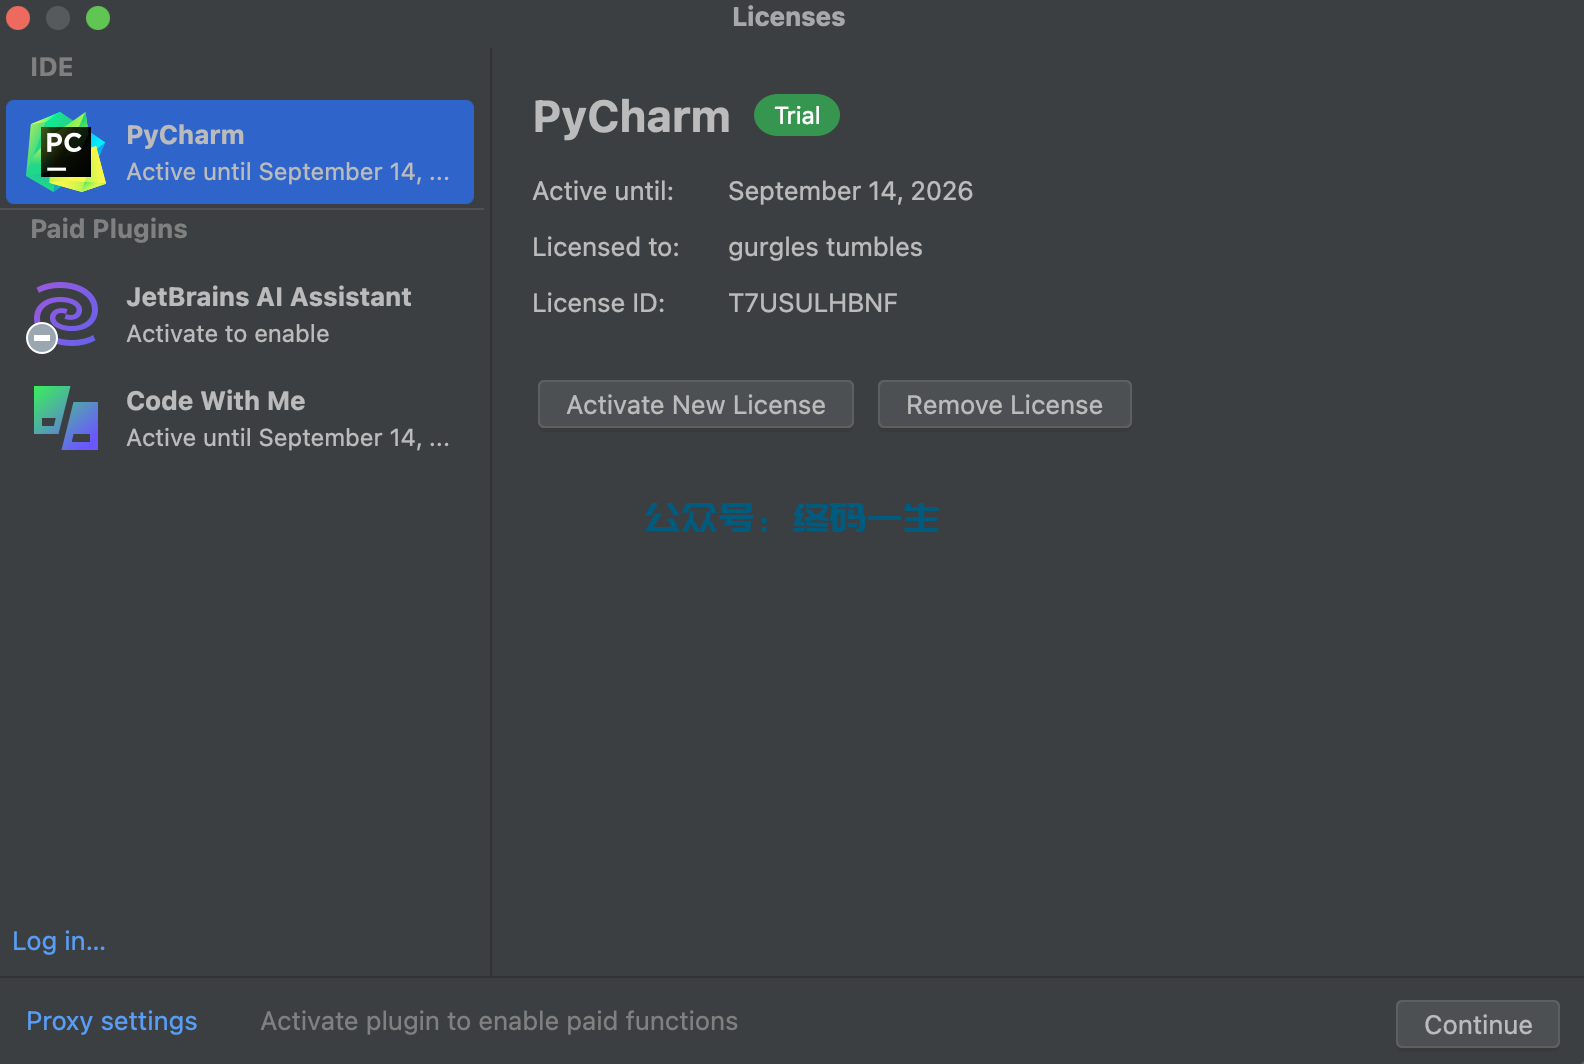 PyCharm2024.1.4激活码(Pycharm 2024.1.3 激活码 最新激活成功教程教程 激活成功教程工具 永久激活（全家桶 亲测）)